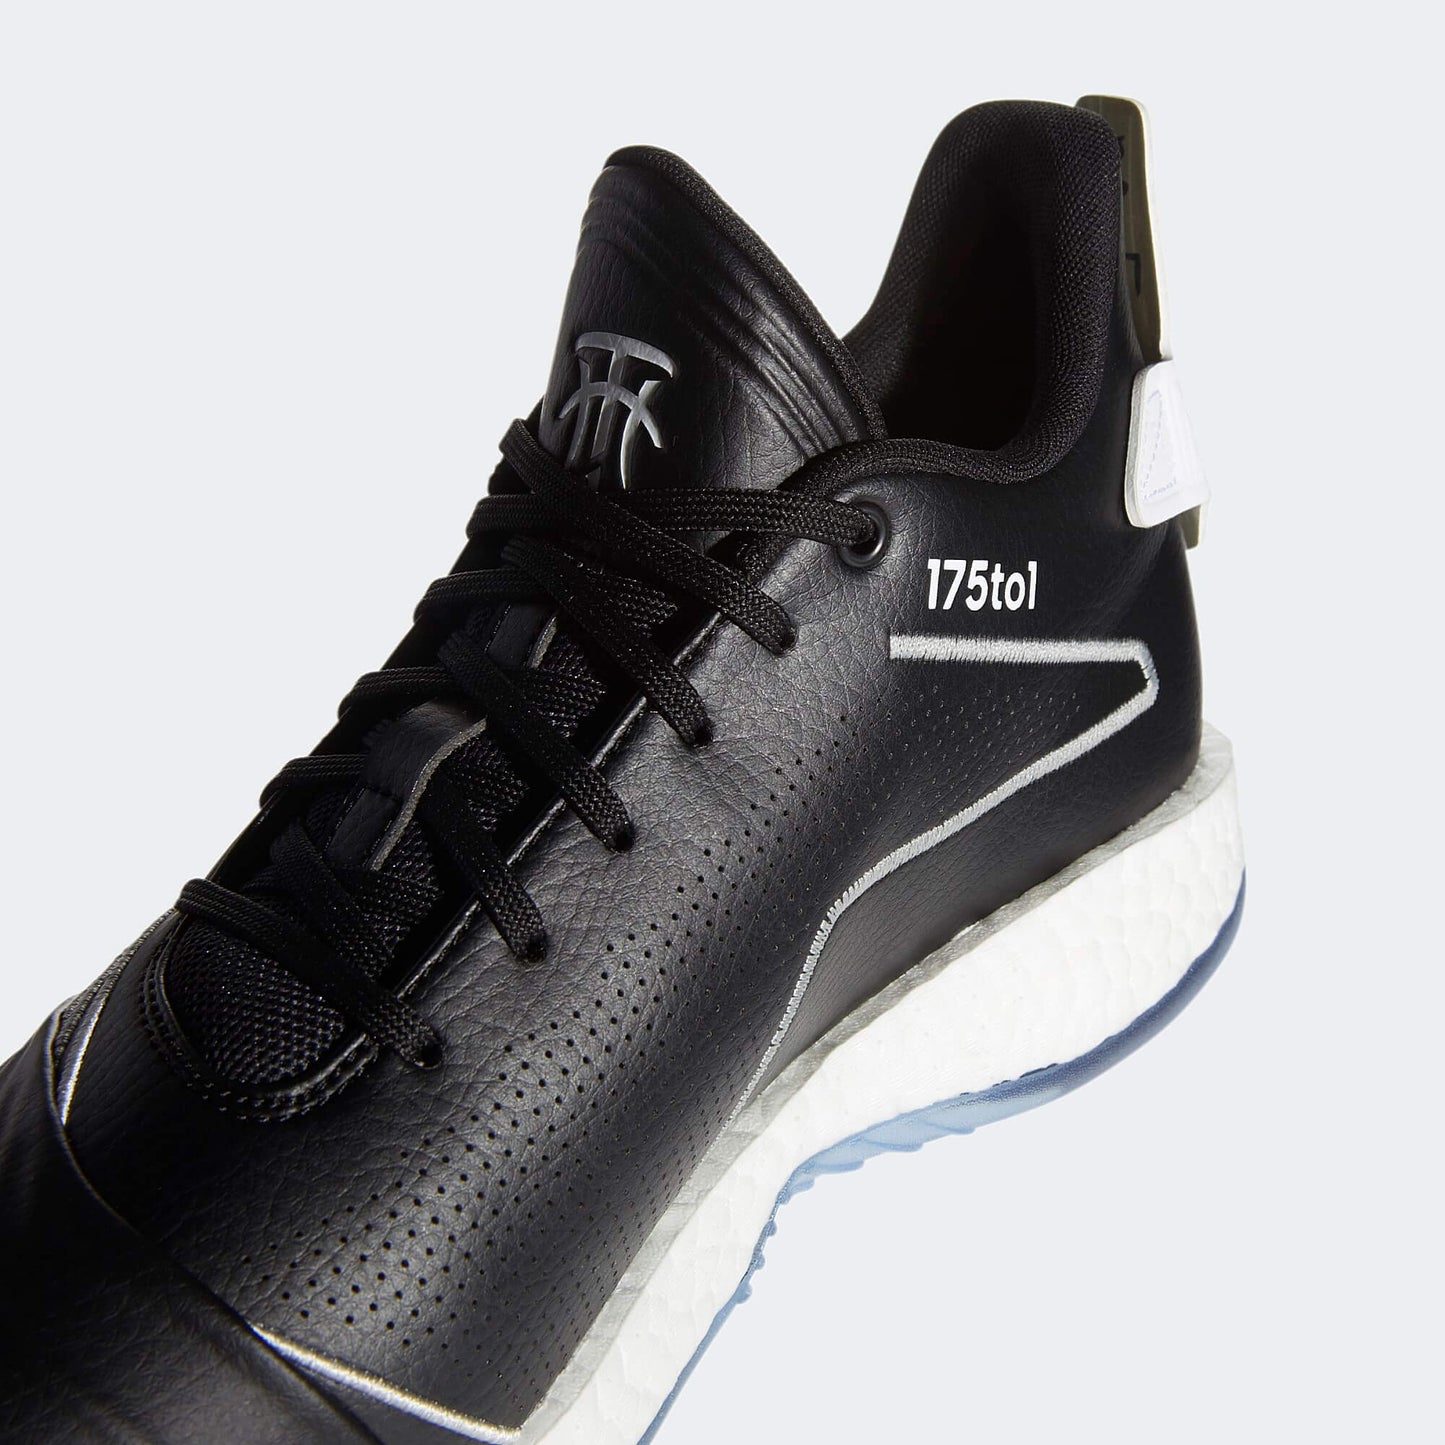 Adidas Tmac Millennium Black